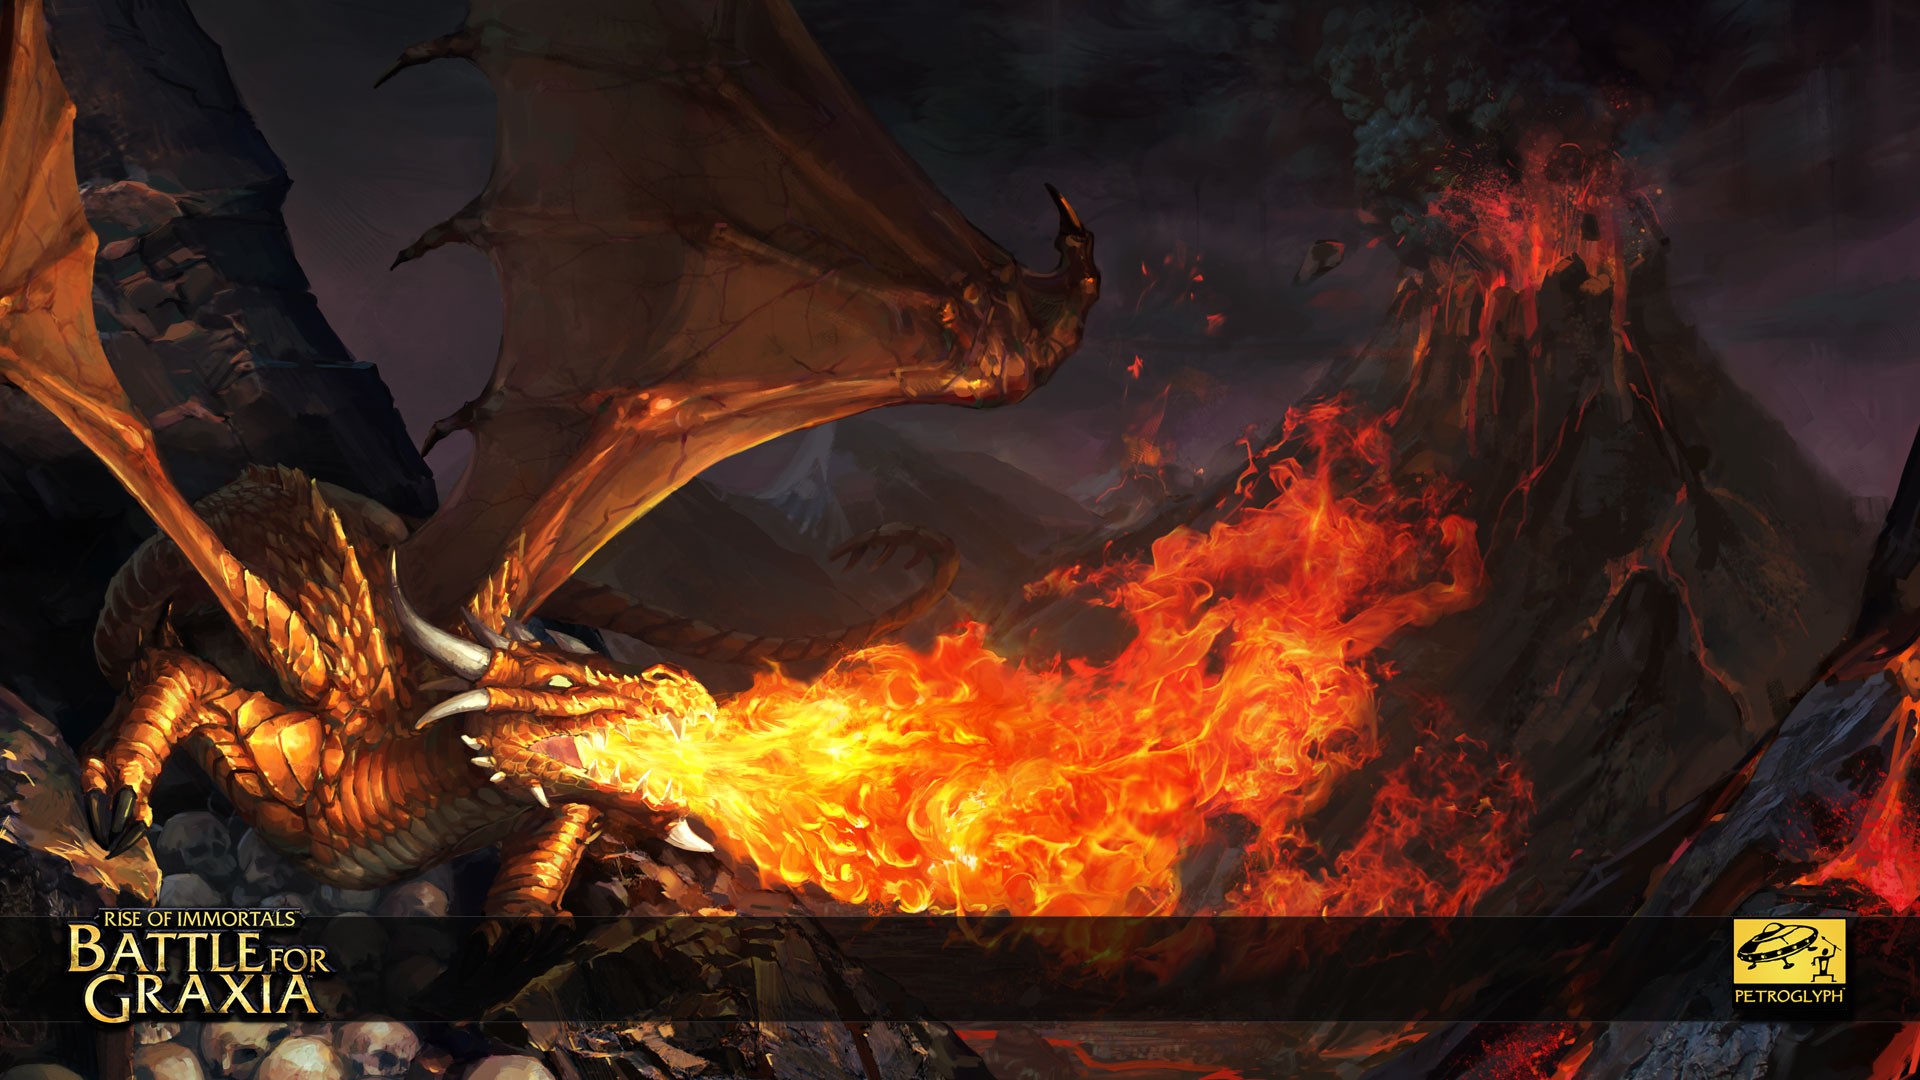 Rise Of Immortals: Battle For Graxia HD Wallpaper